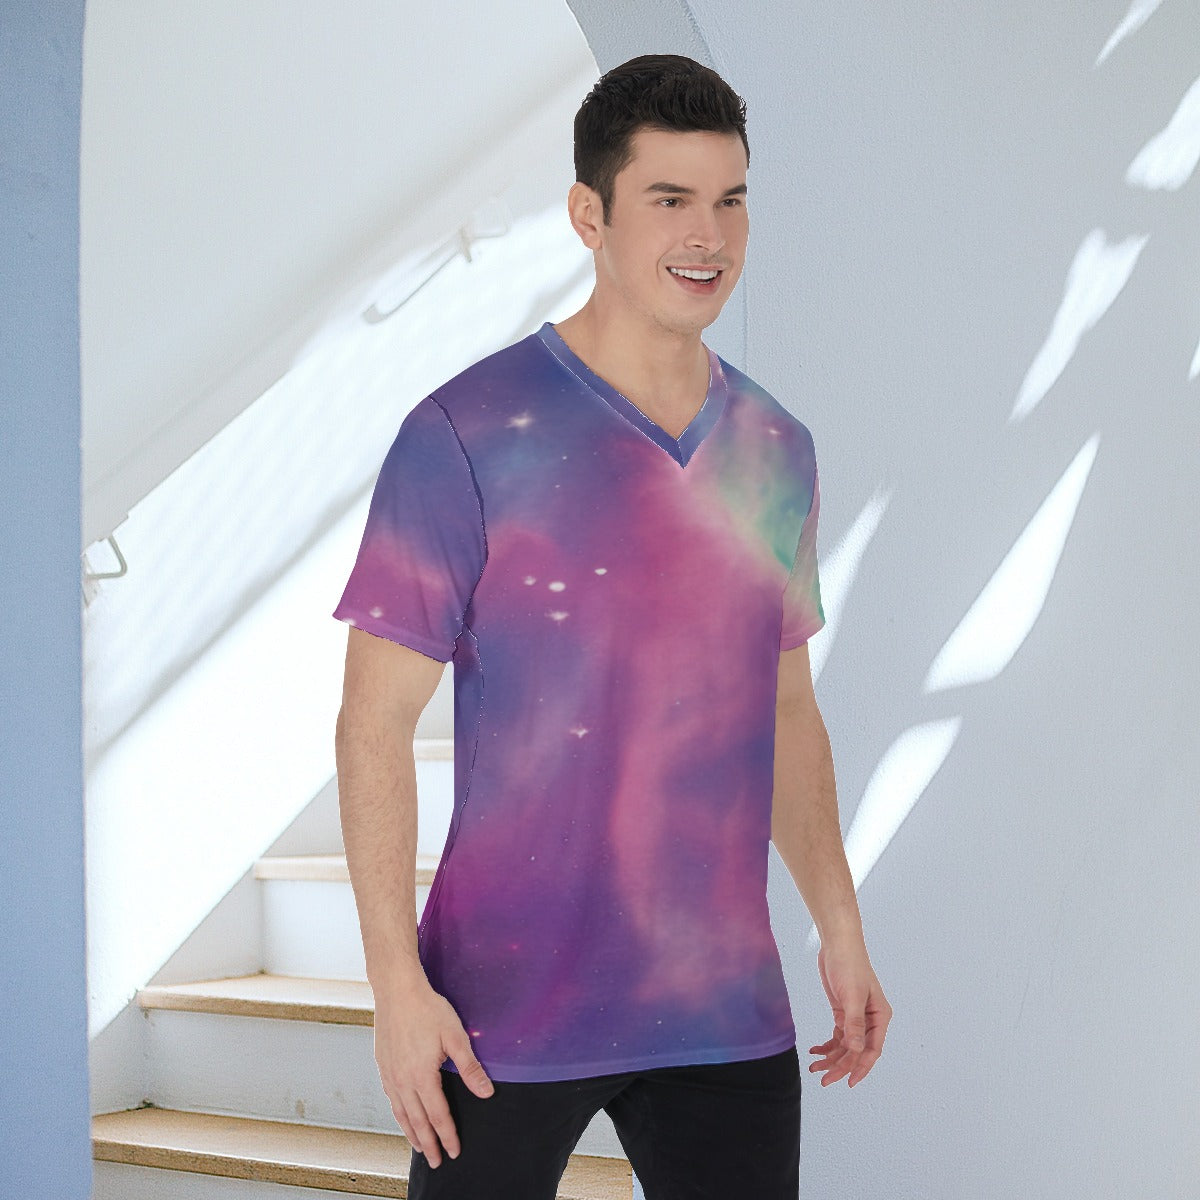 Vibrant Iridescent Cosmic Nebula Fashion Men's V-Neck T-Shirt Tee - The Nebula Palace